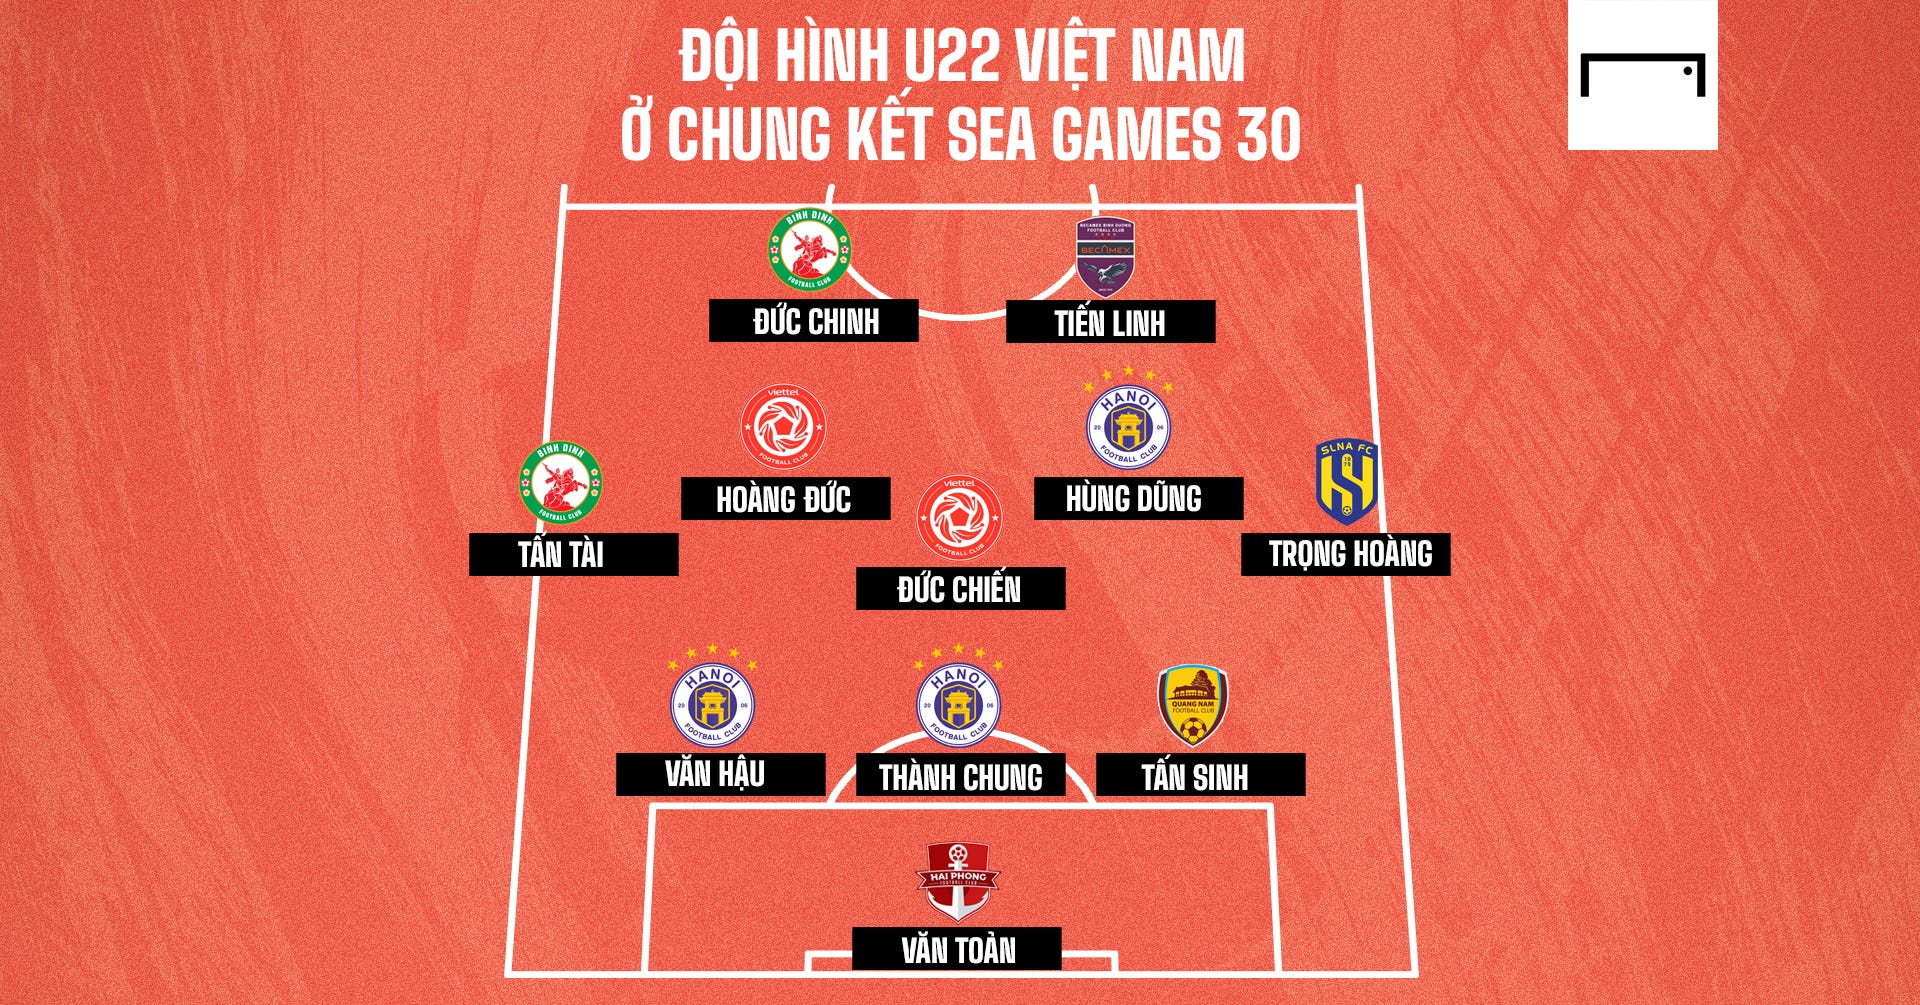 Vietnam U22 XI at the SEA Games 30 Final GFX